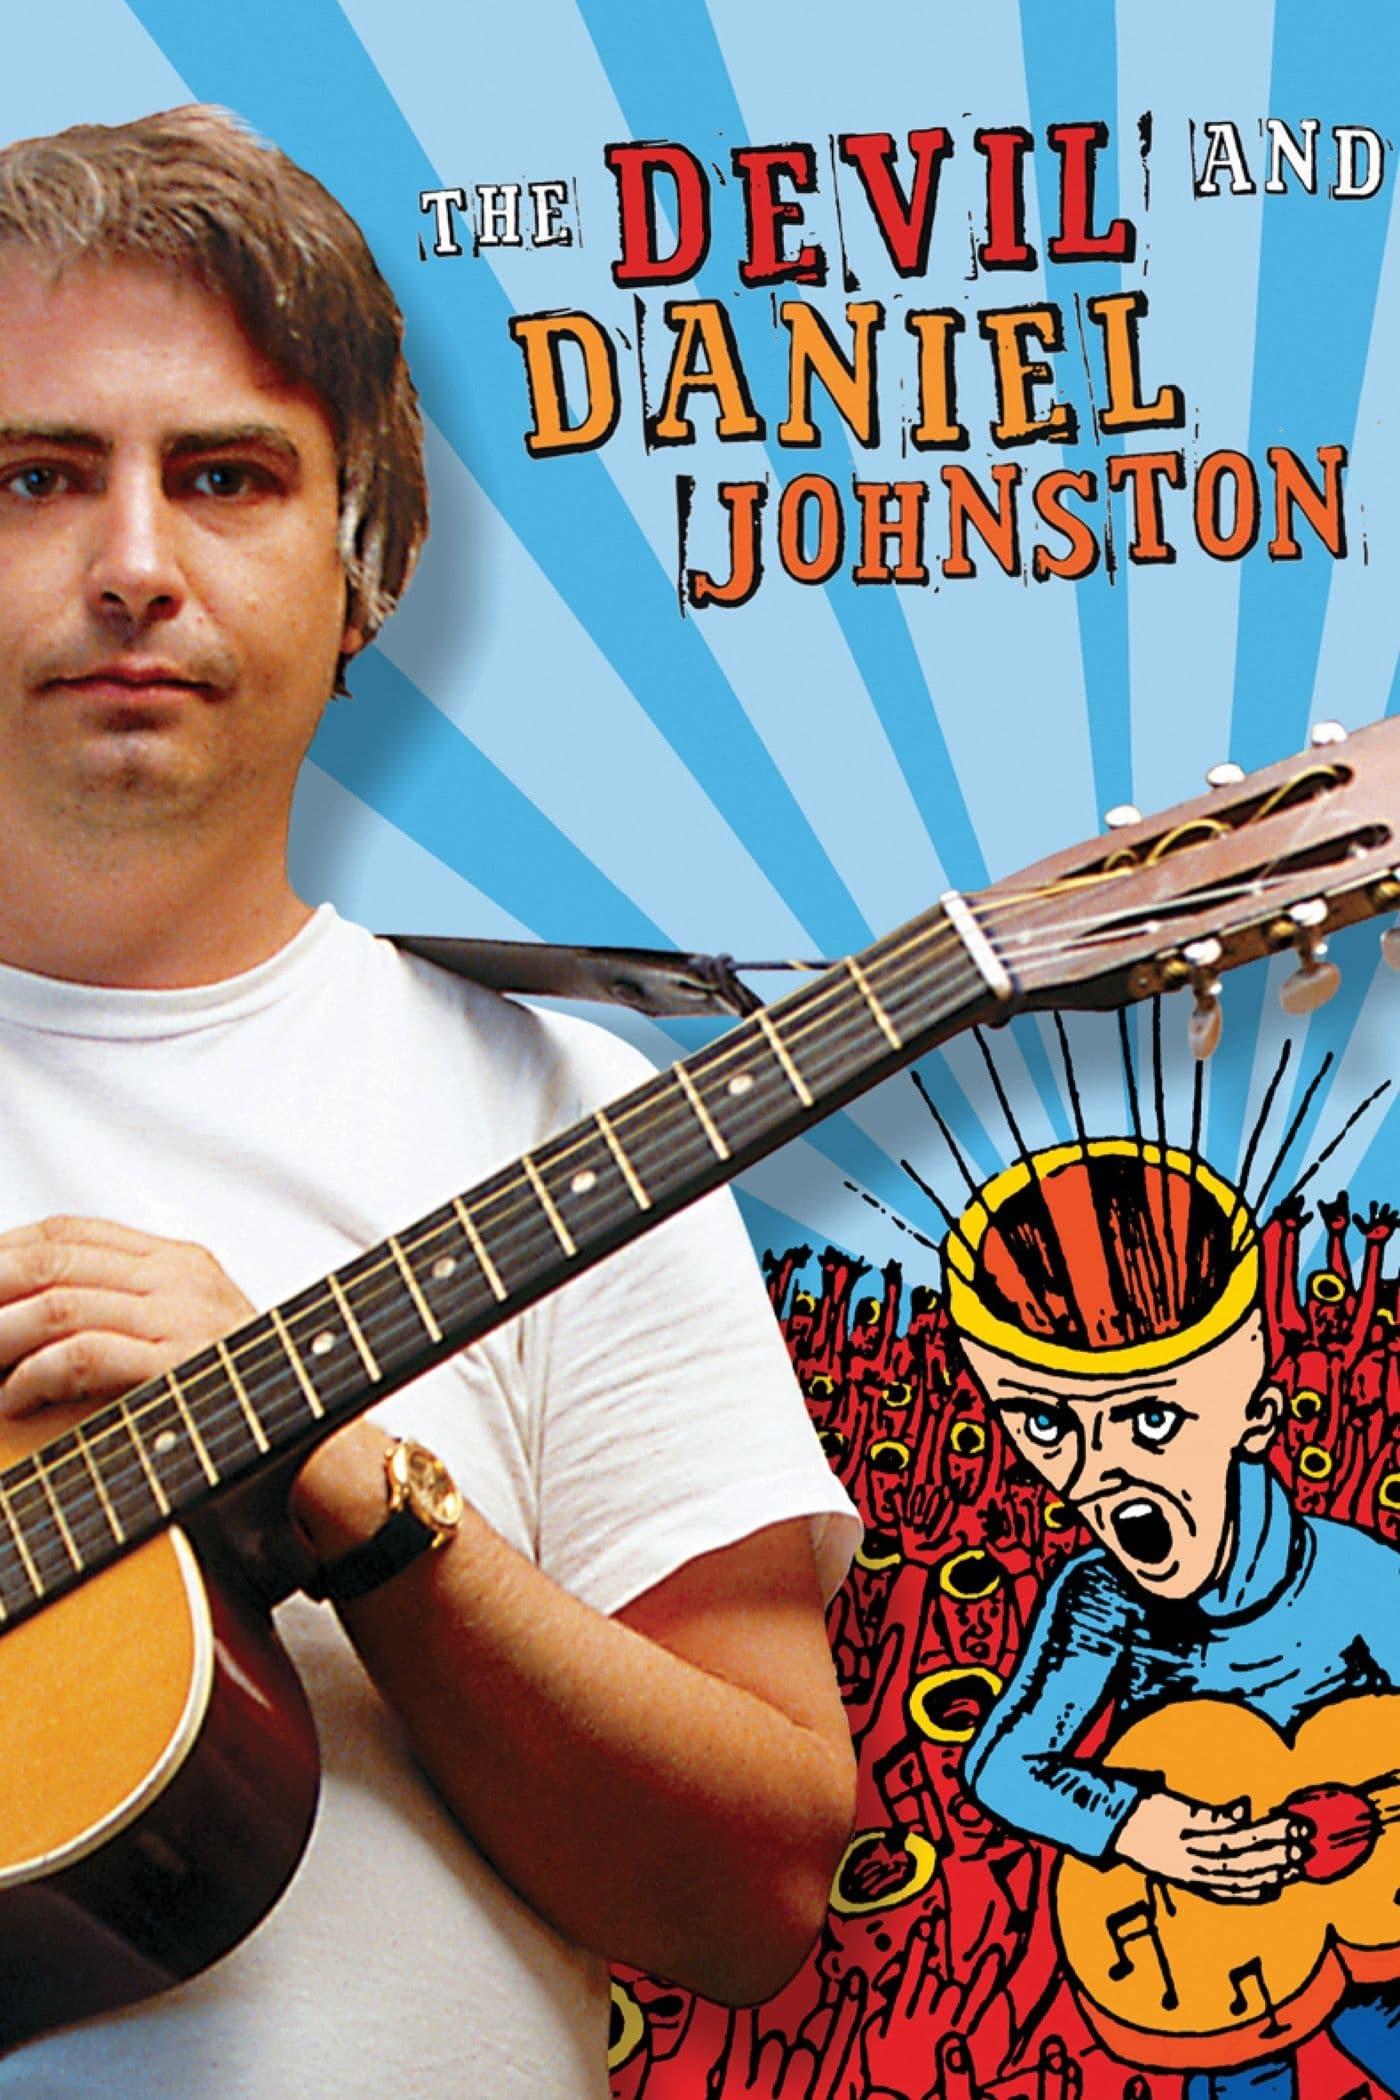 The Devil and Daniel Johnston poster